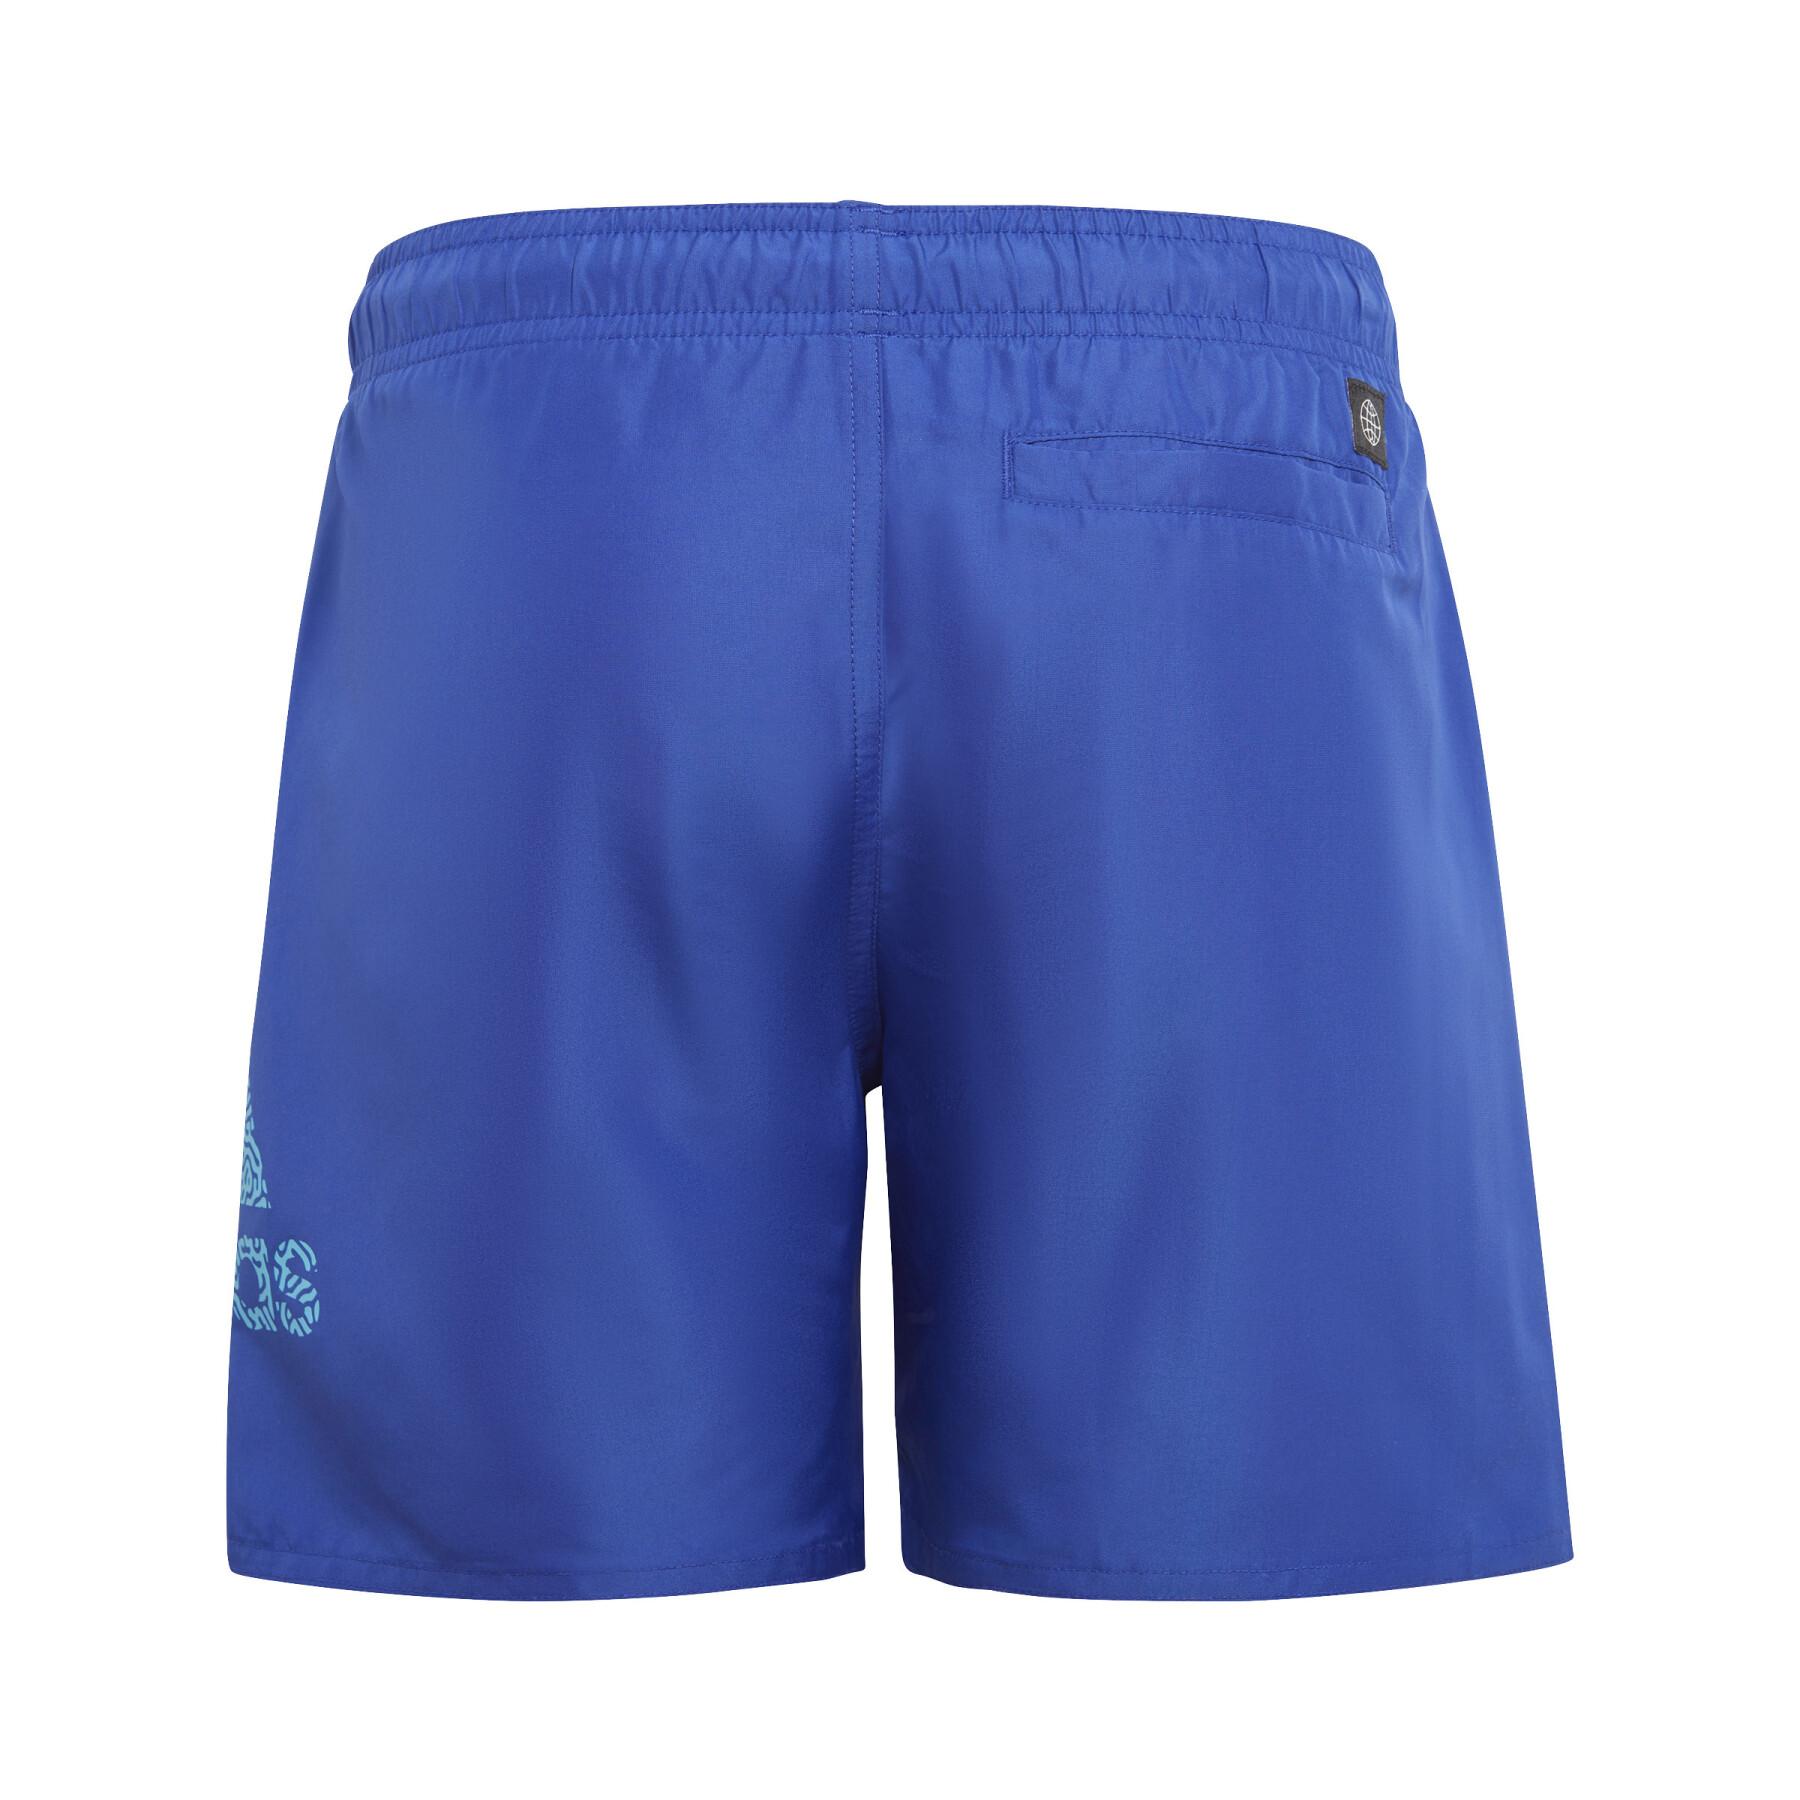 Children's swimming shorts adidas Logo Clx